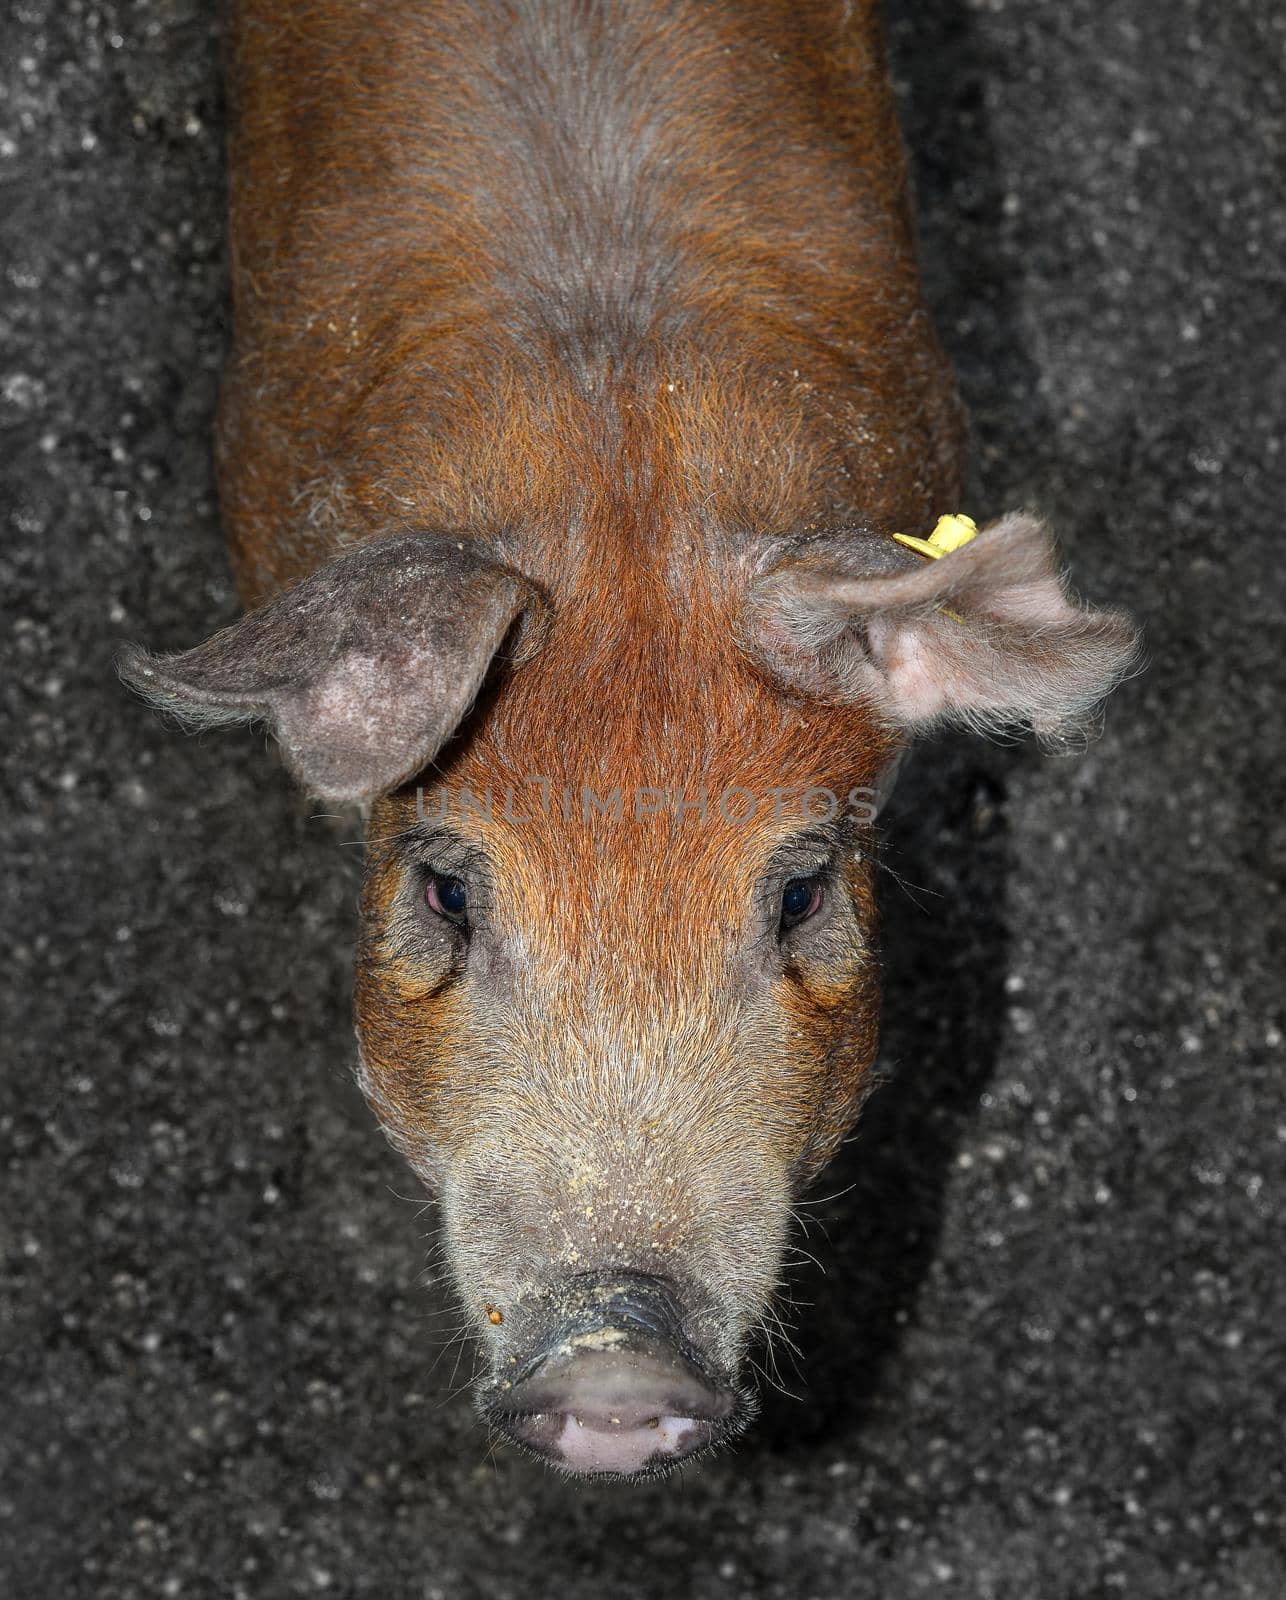 Pig portrait close up by esvetleishaya